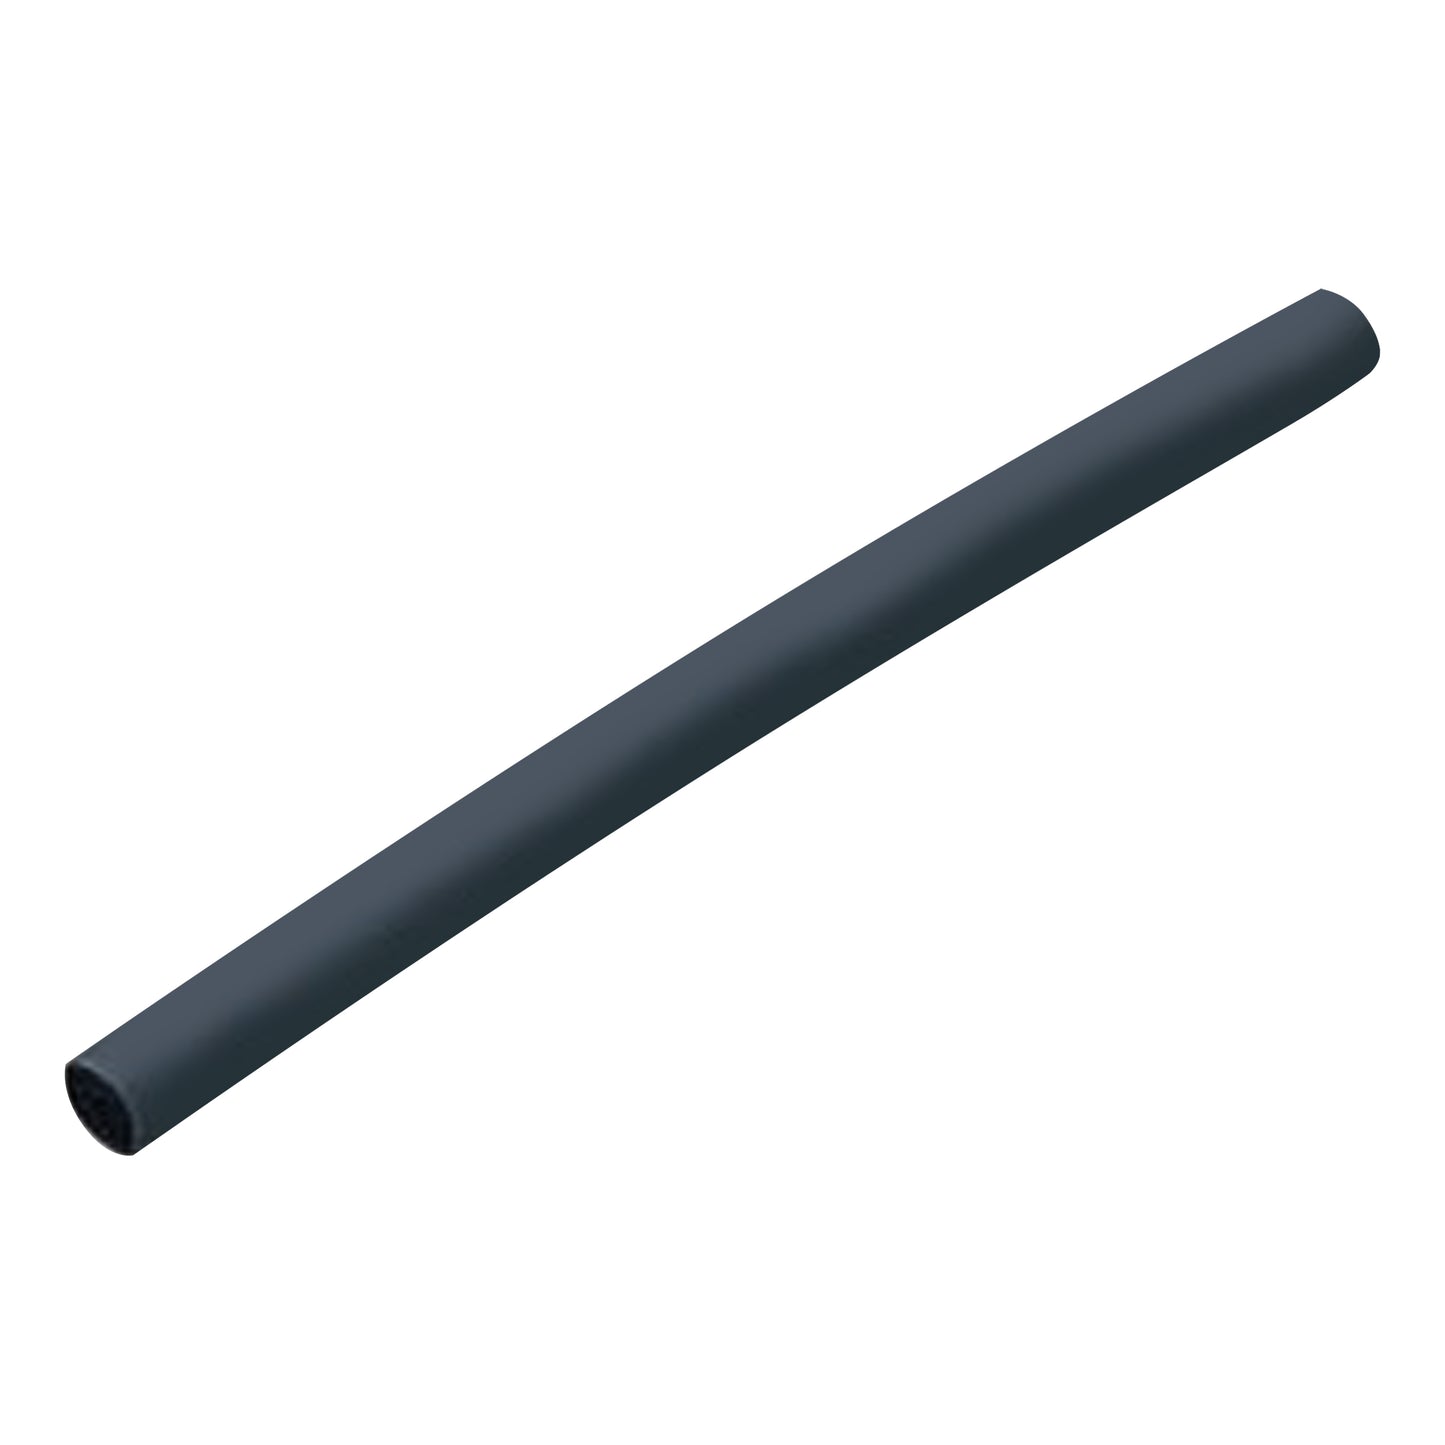 Flexible Thin Single Wall Non-Adhesive Heat Shrink Tubing 2:1 Black 3/64" ID - 12" Inch 10 Pack